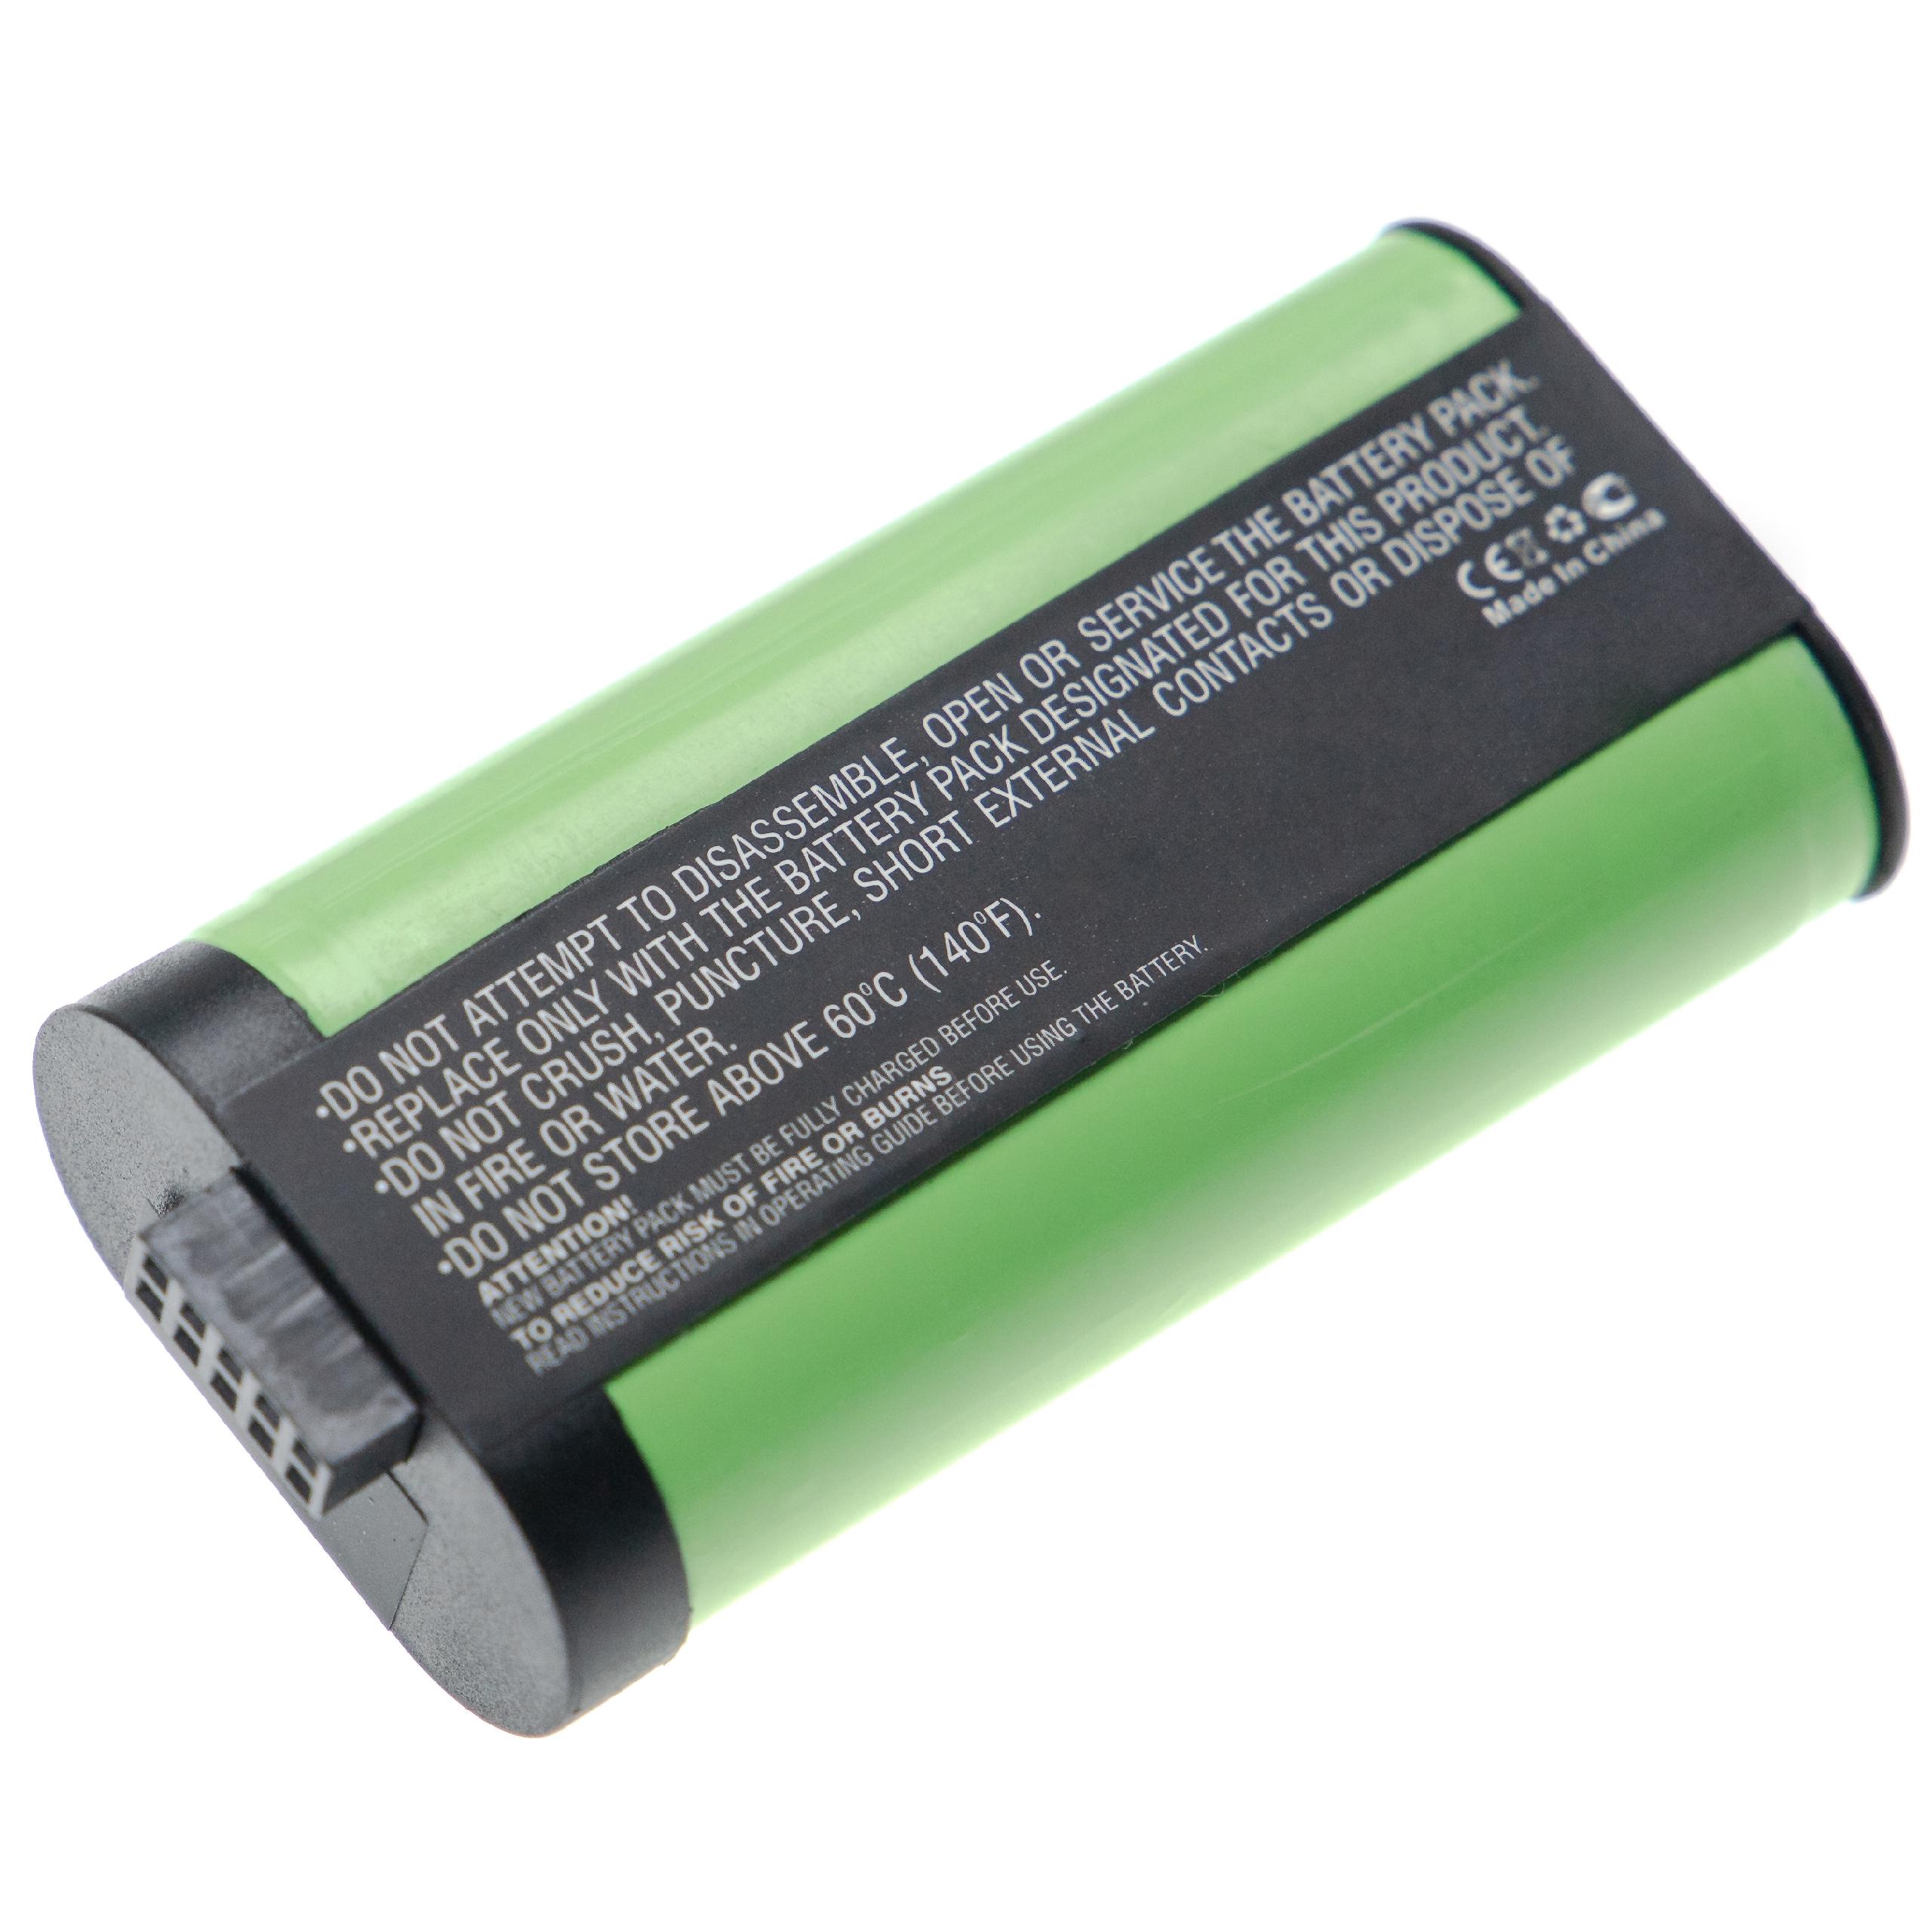  Battery replaces Logitech 533-000146 for LogitechLoudspeaker - Li-Ion 3400 mAh